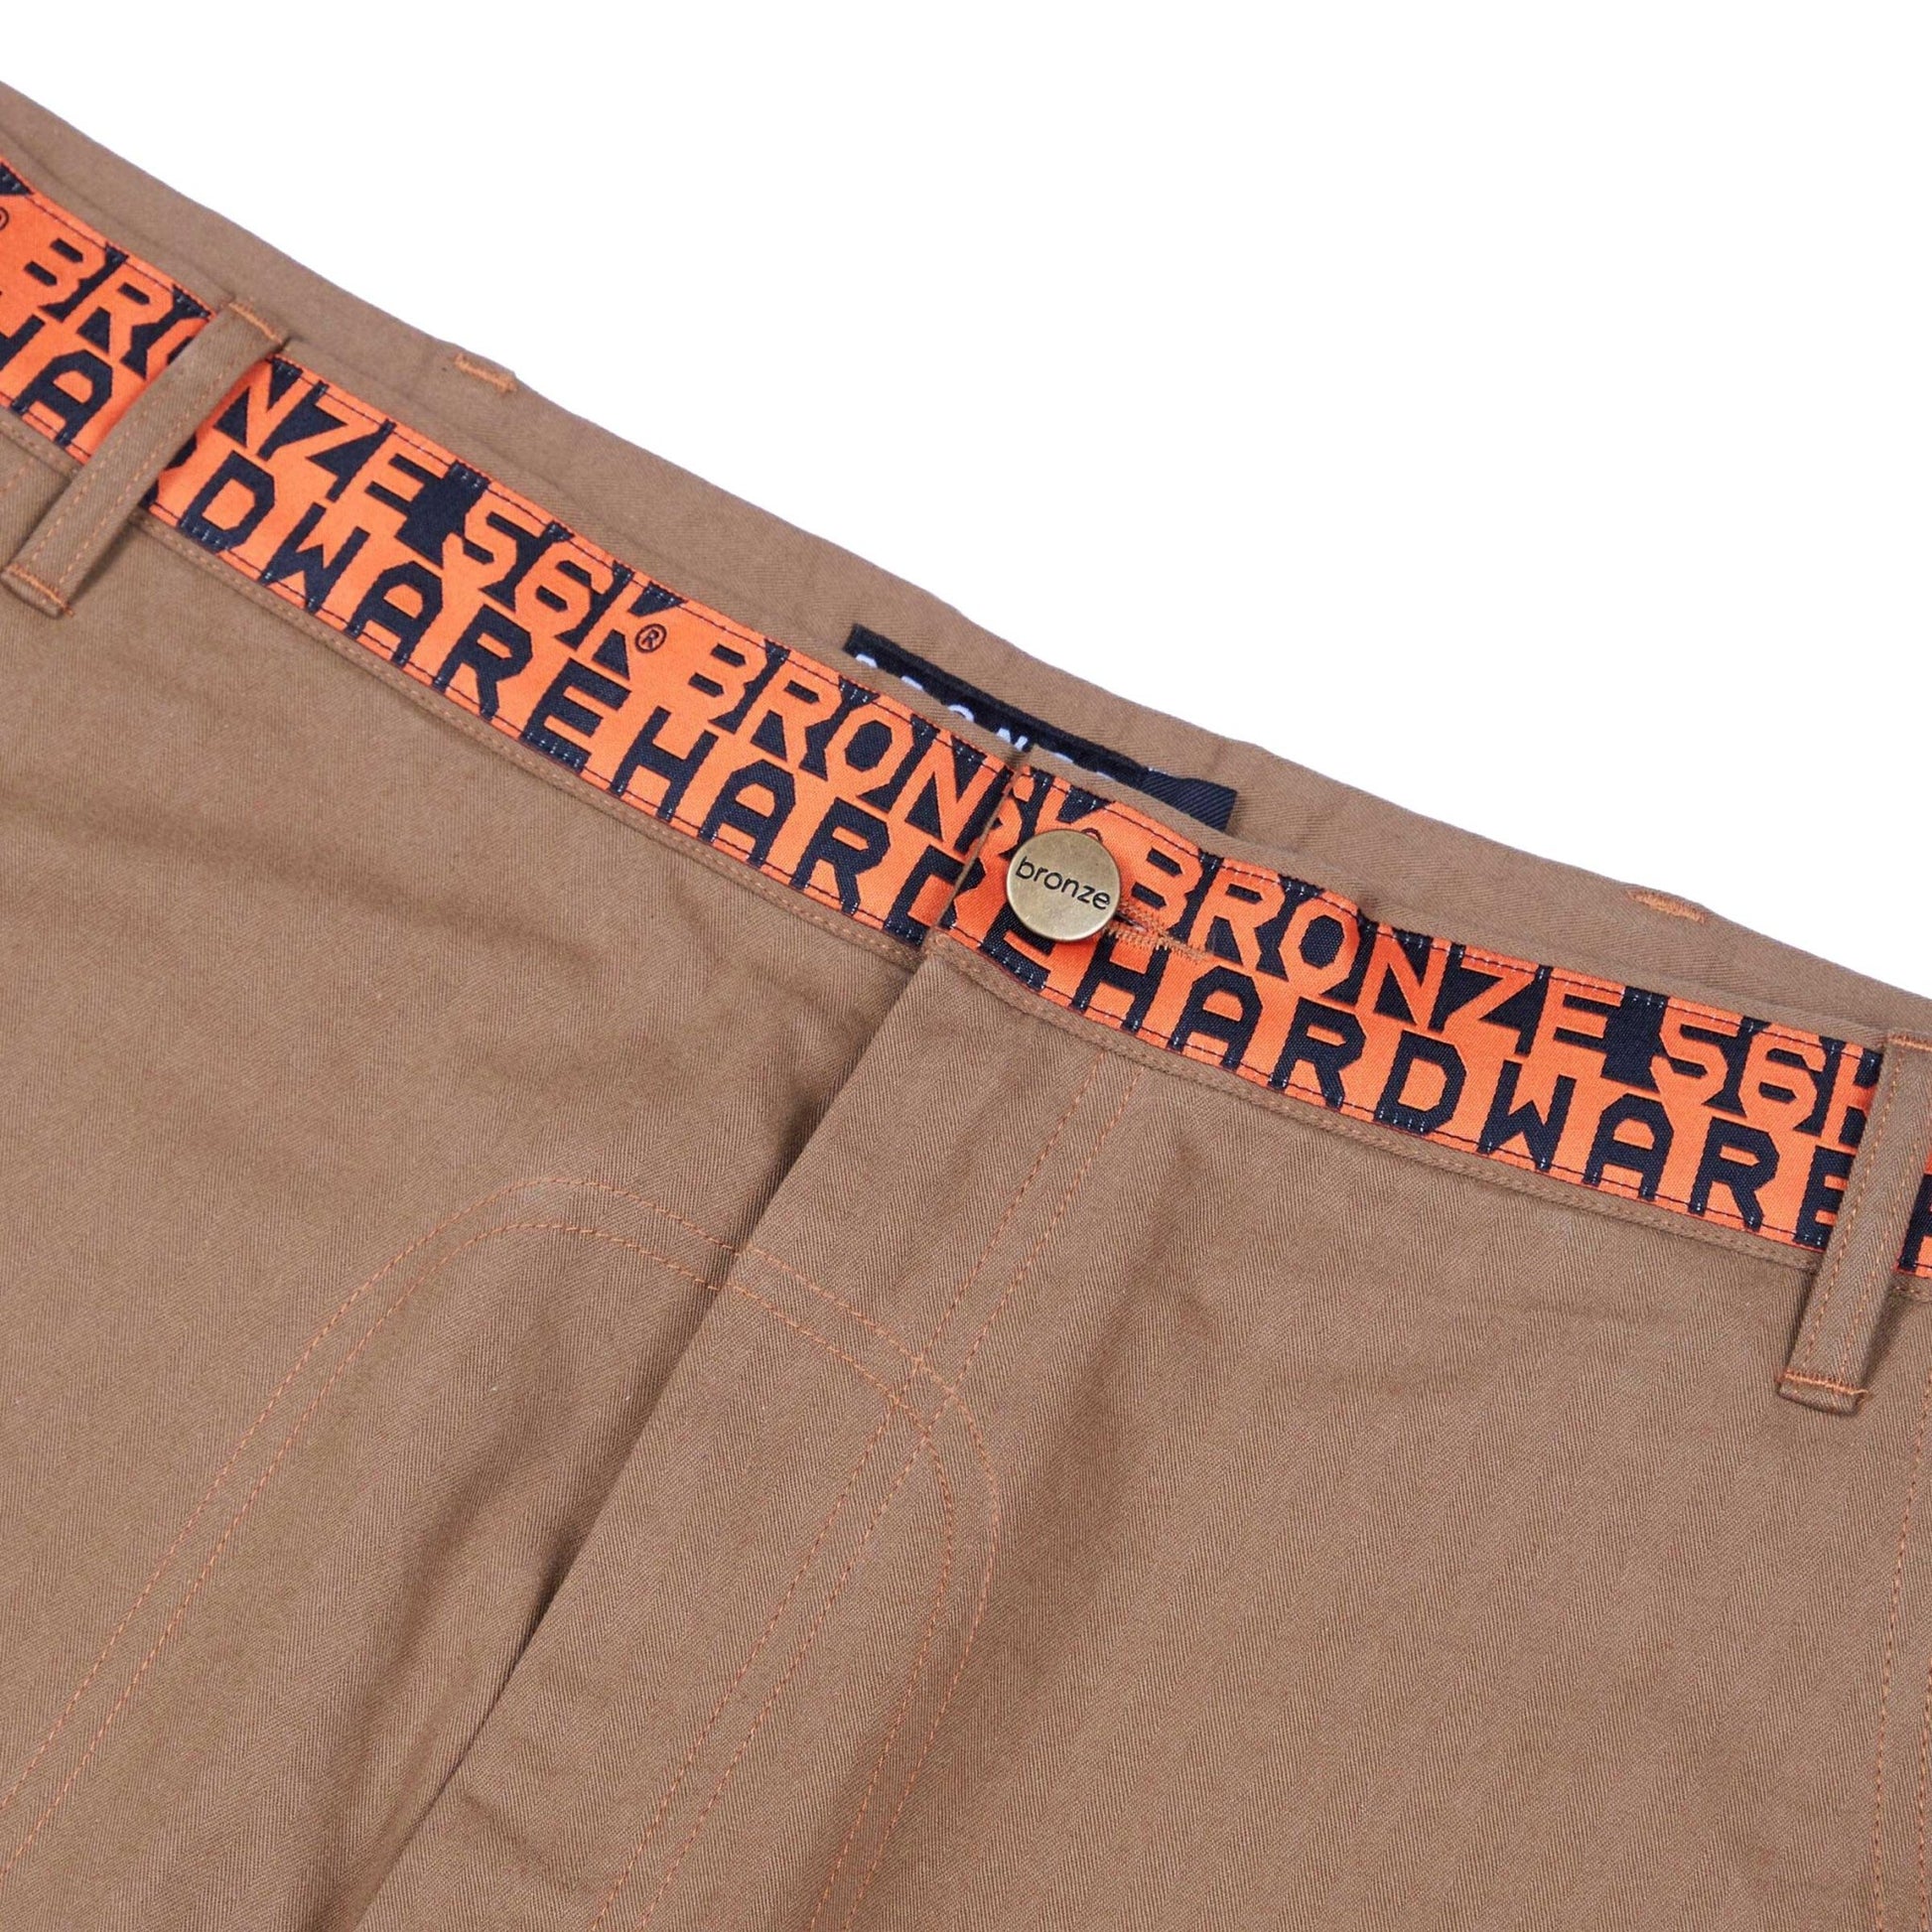 Bronze 56 Field Pants, brown - Tiki Room Skateboards - 2